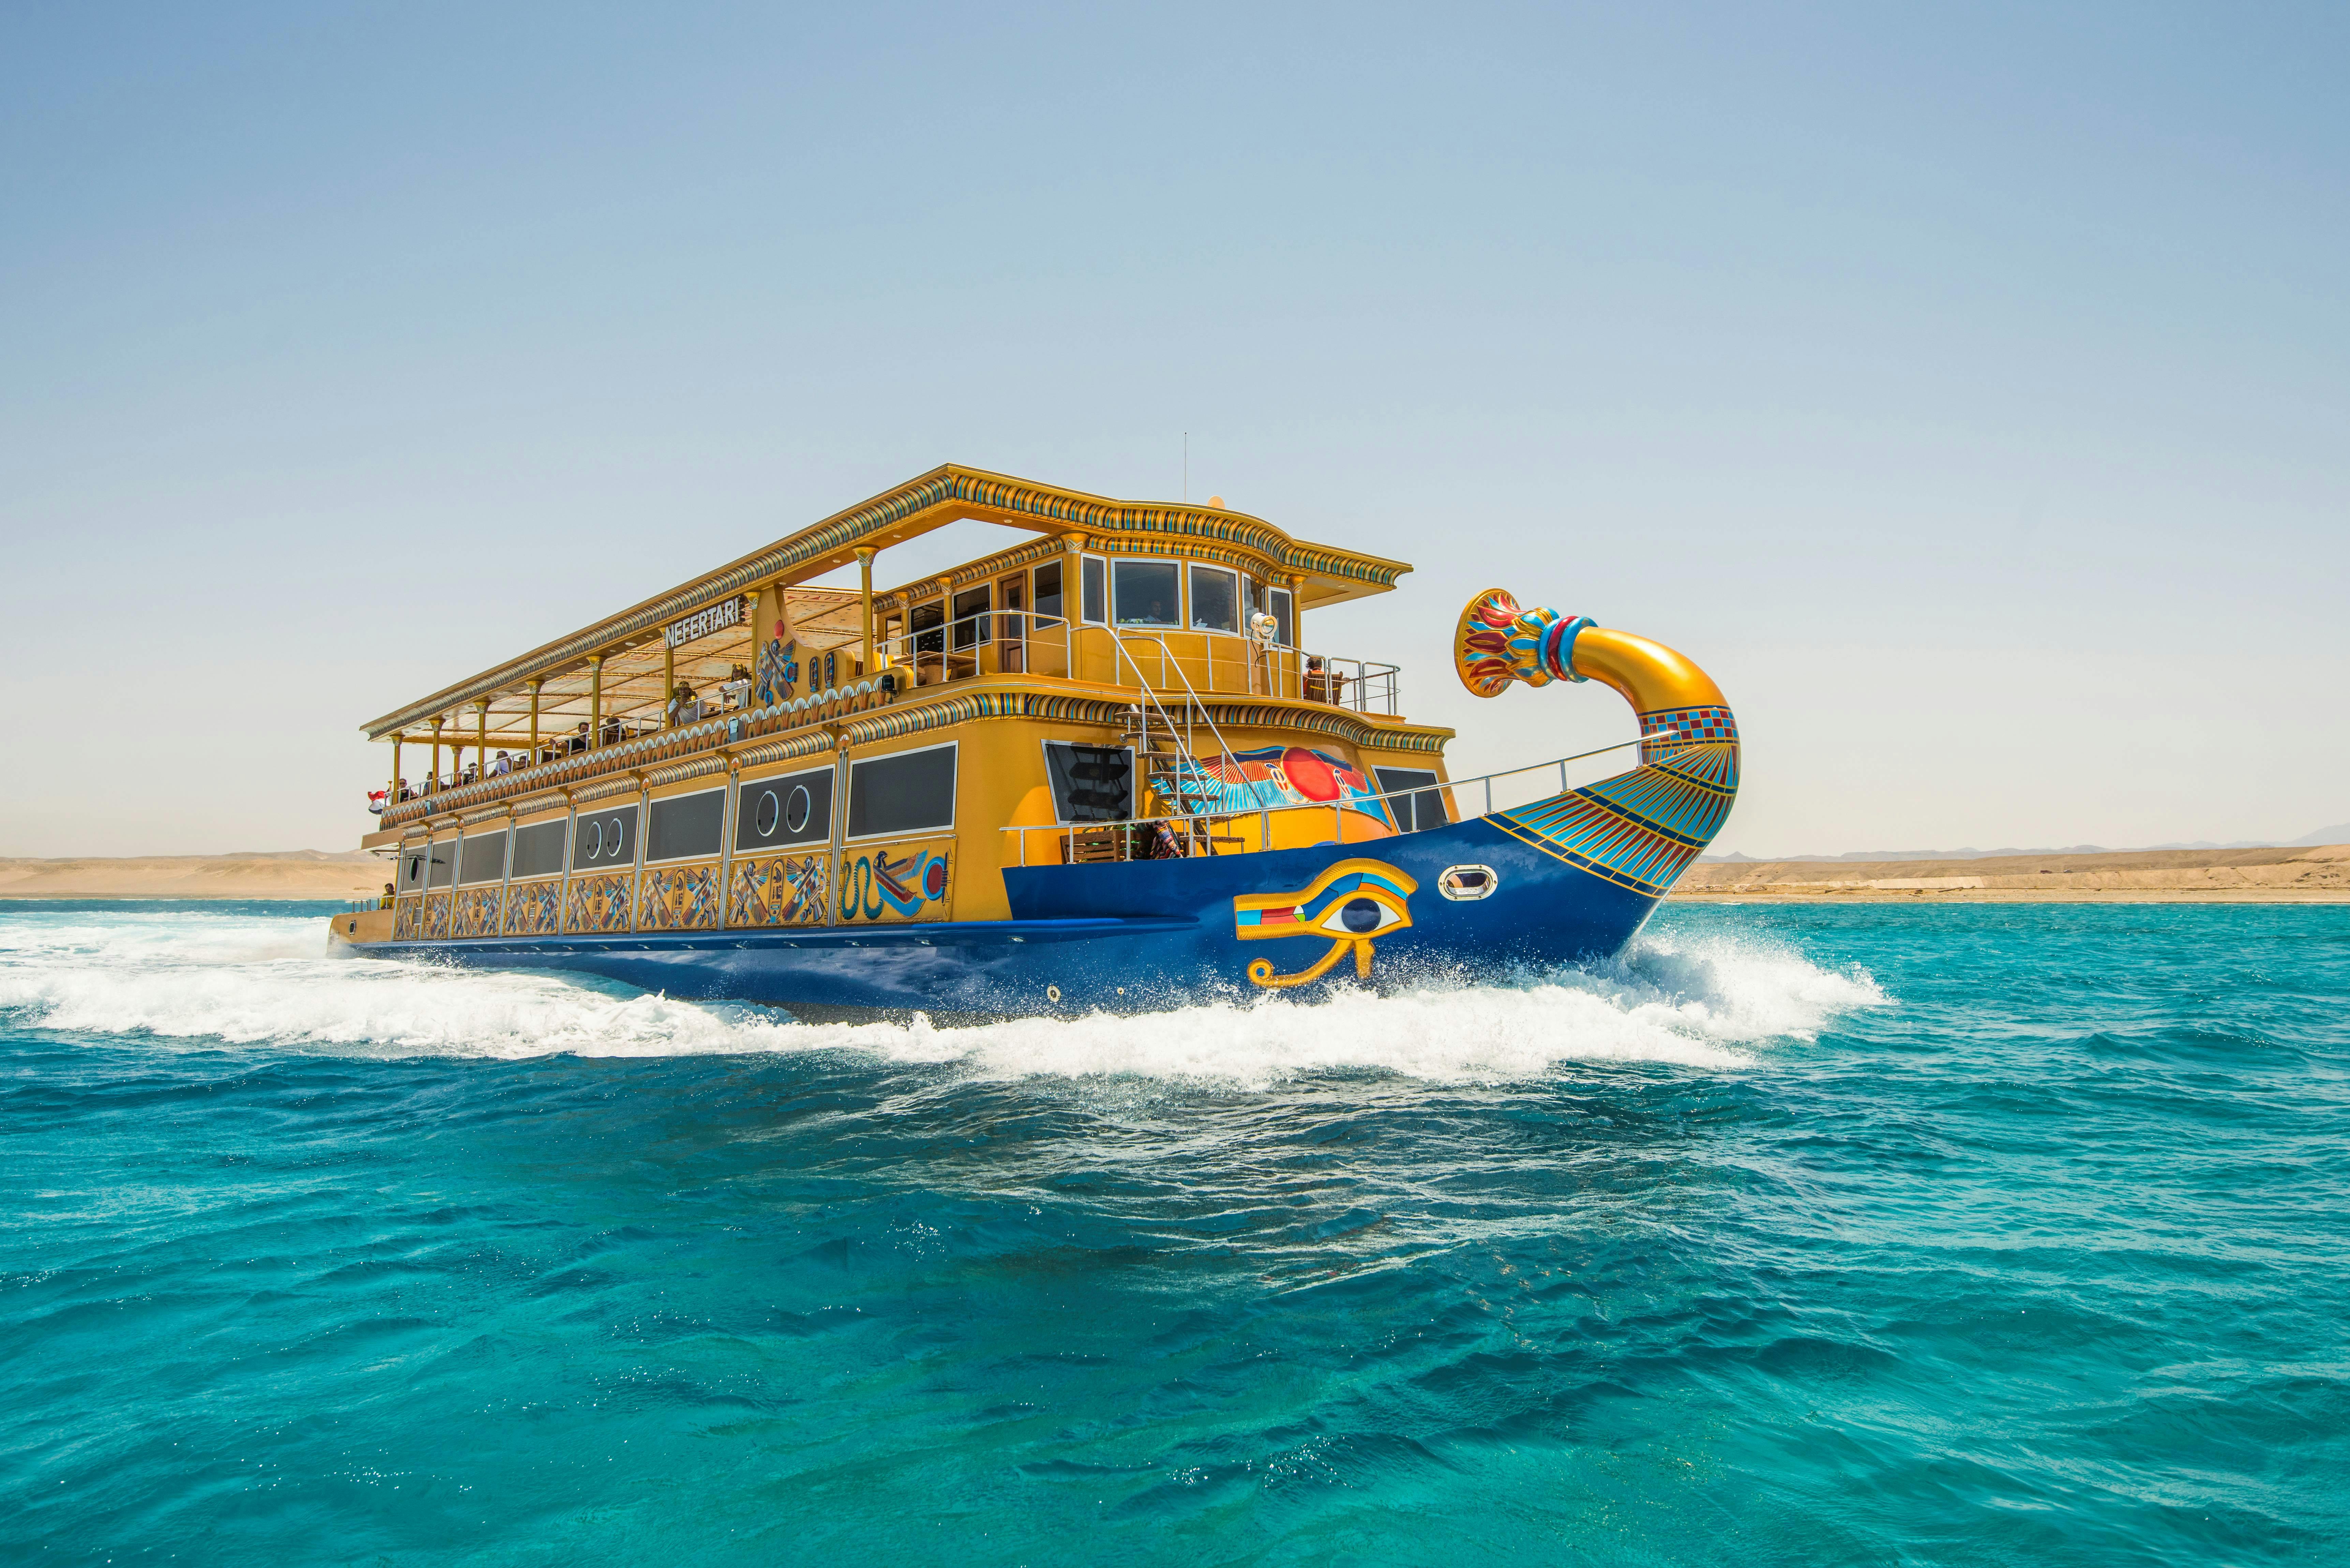 Nefertari jachtavond VIP-cruise vanuit Marsa Alam